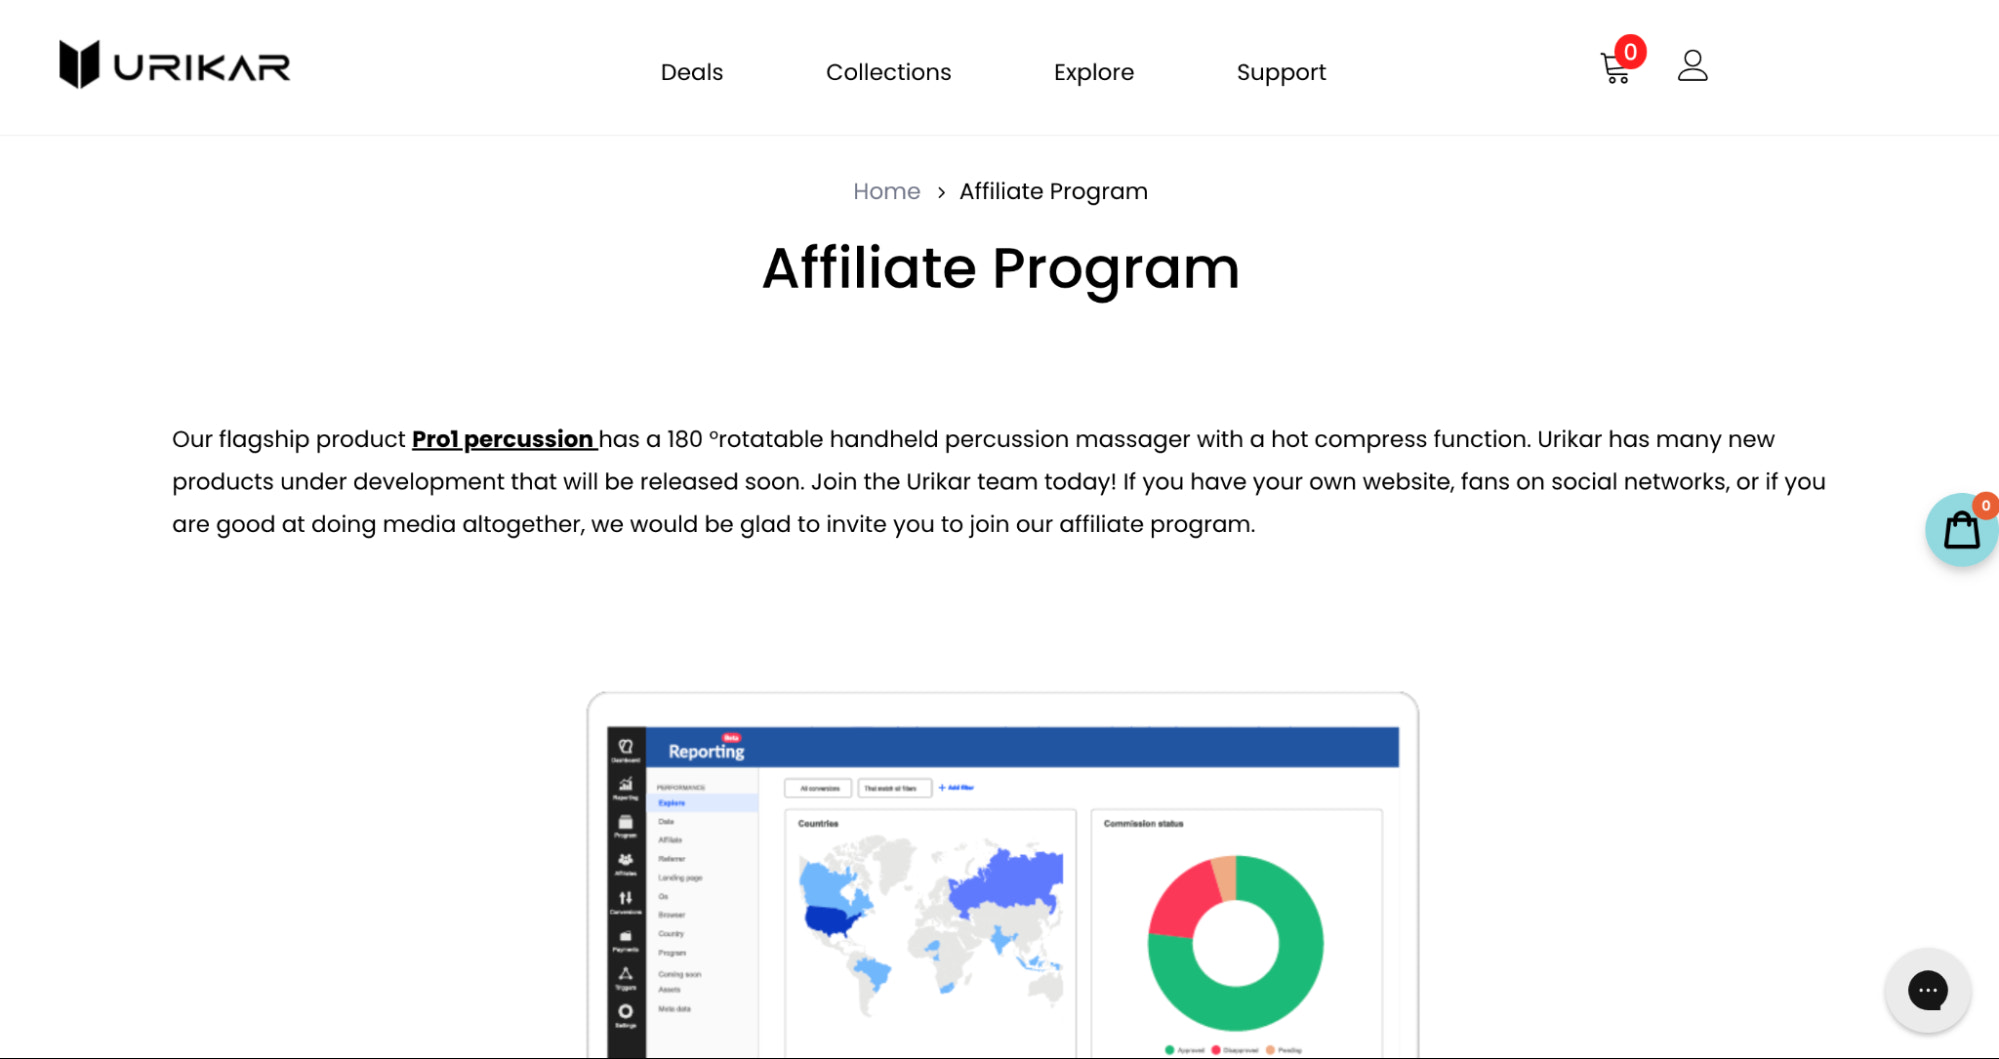 A screenshot of the Urikar "Affiliate Program" page